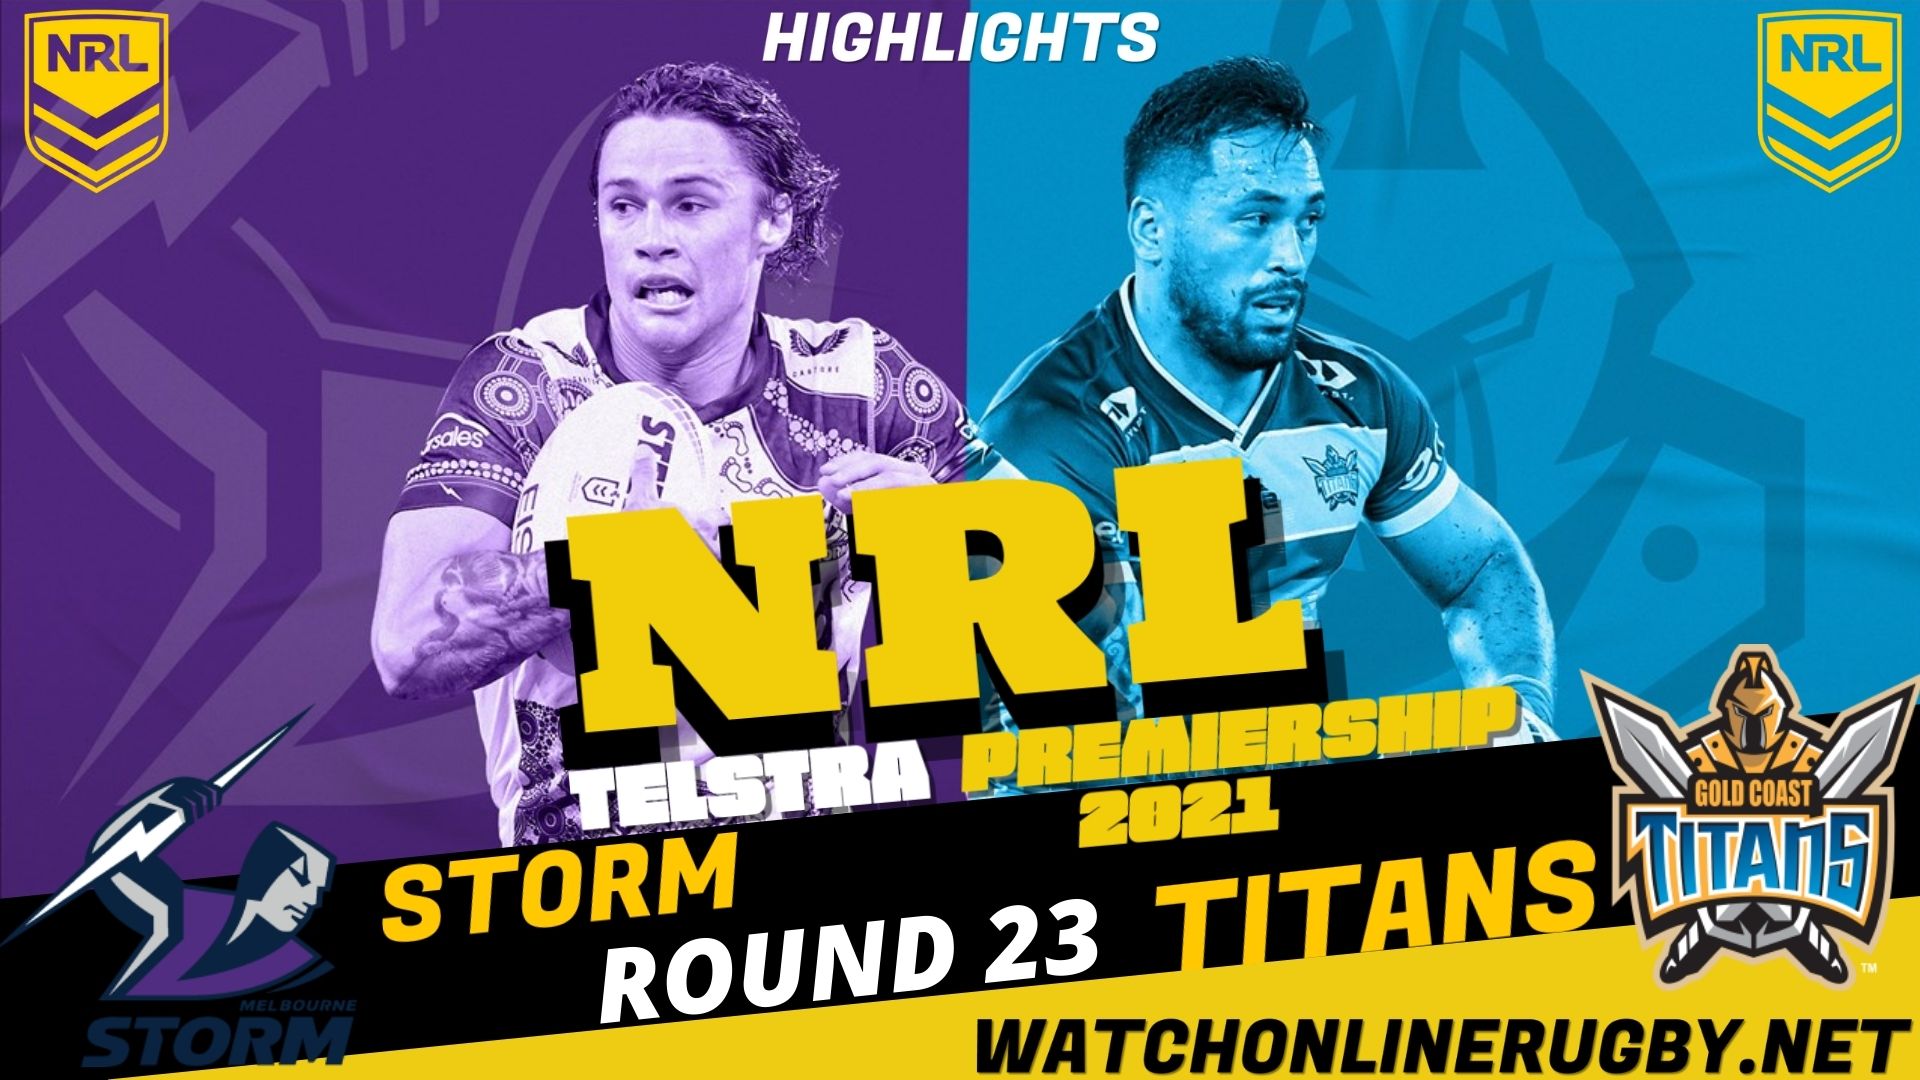 Titans Vs Storm Highlights 2021 RD 23 NRL Rugby